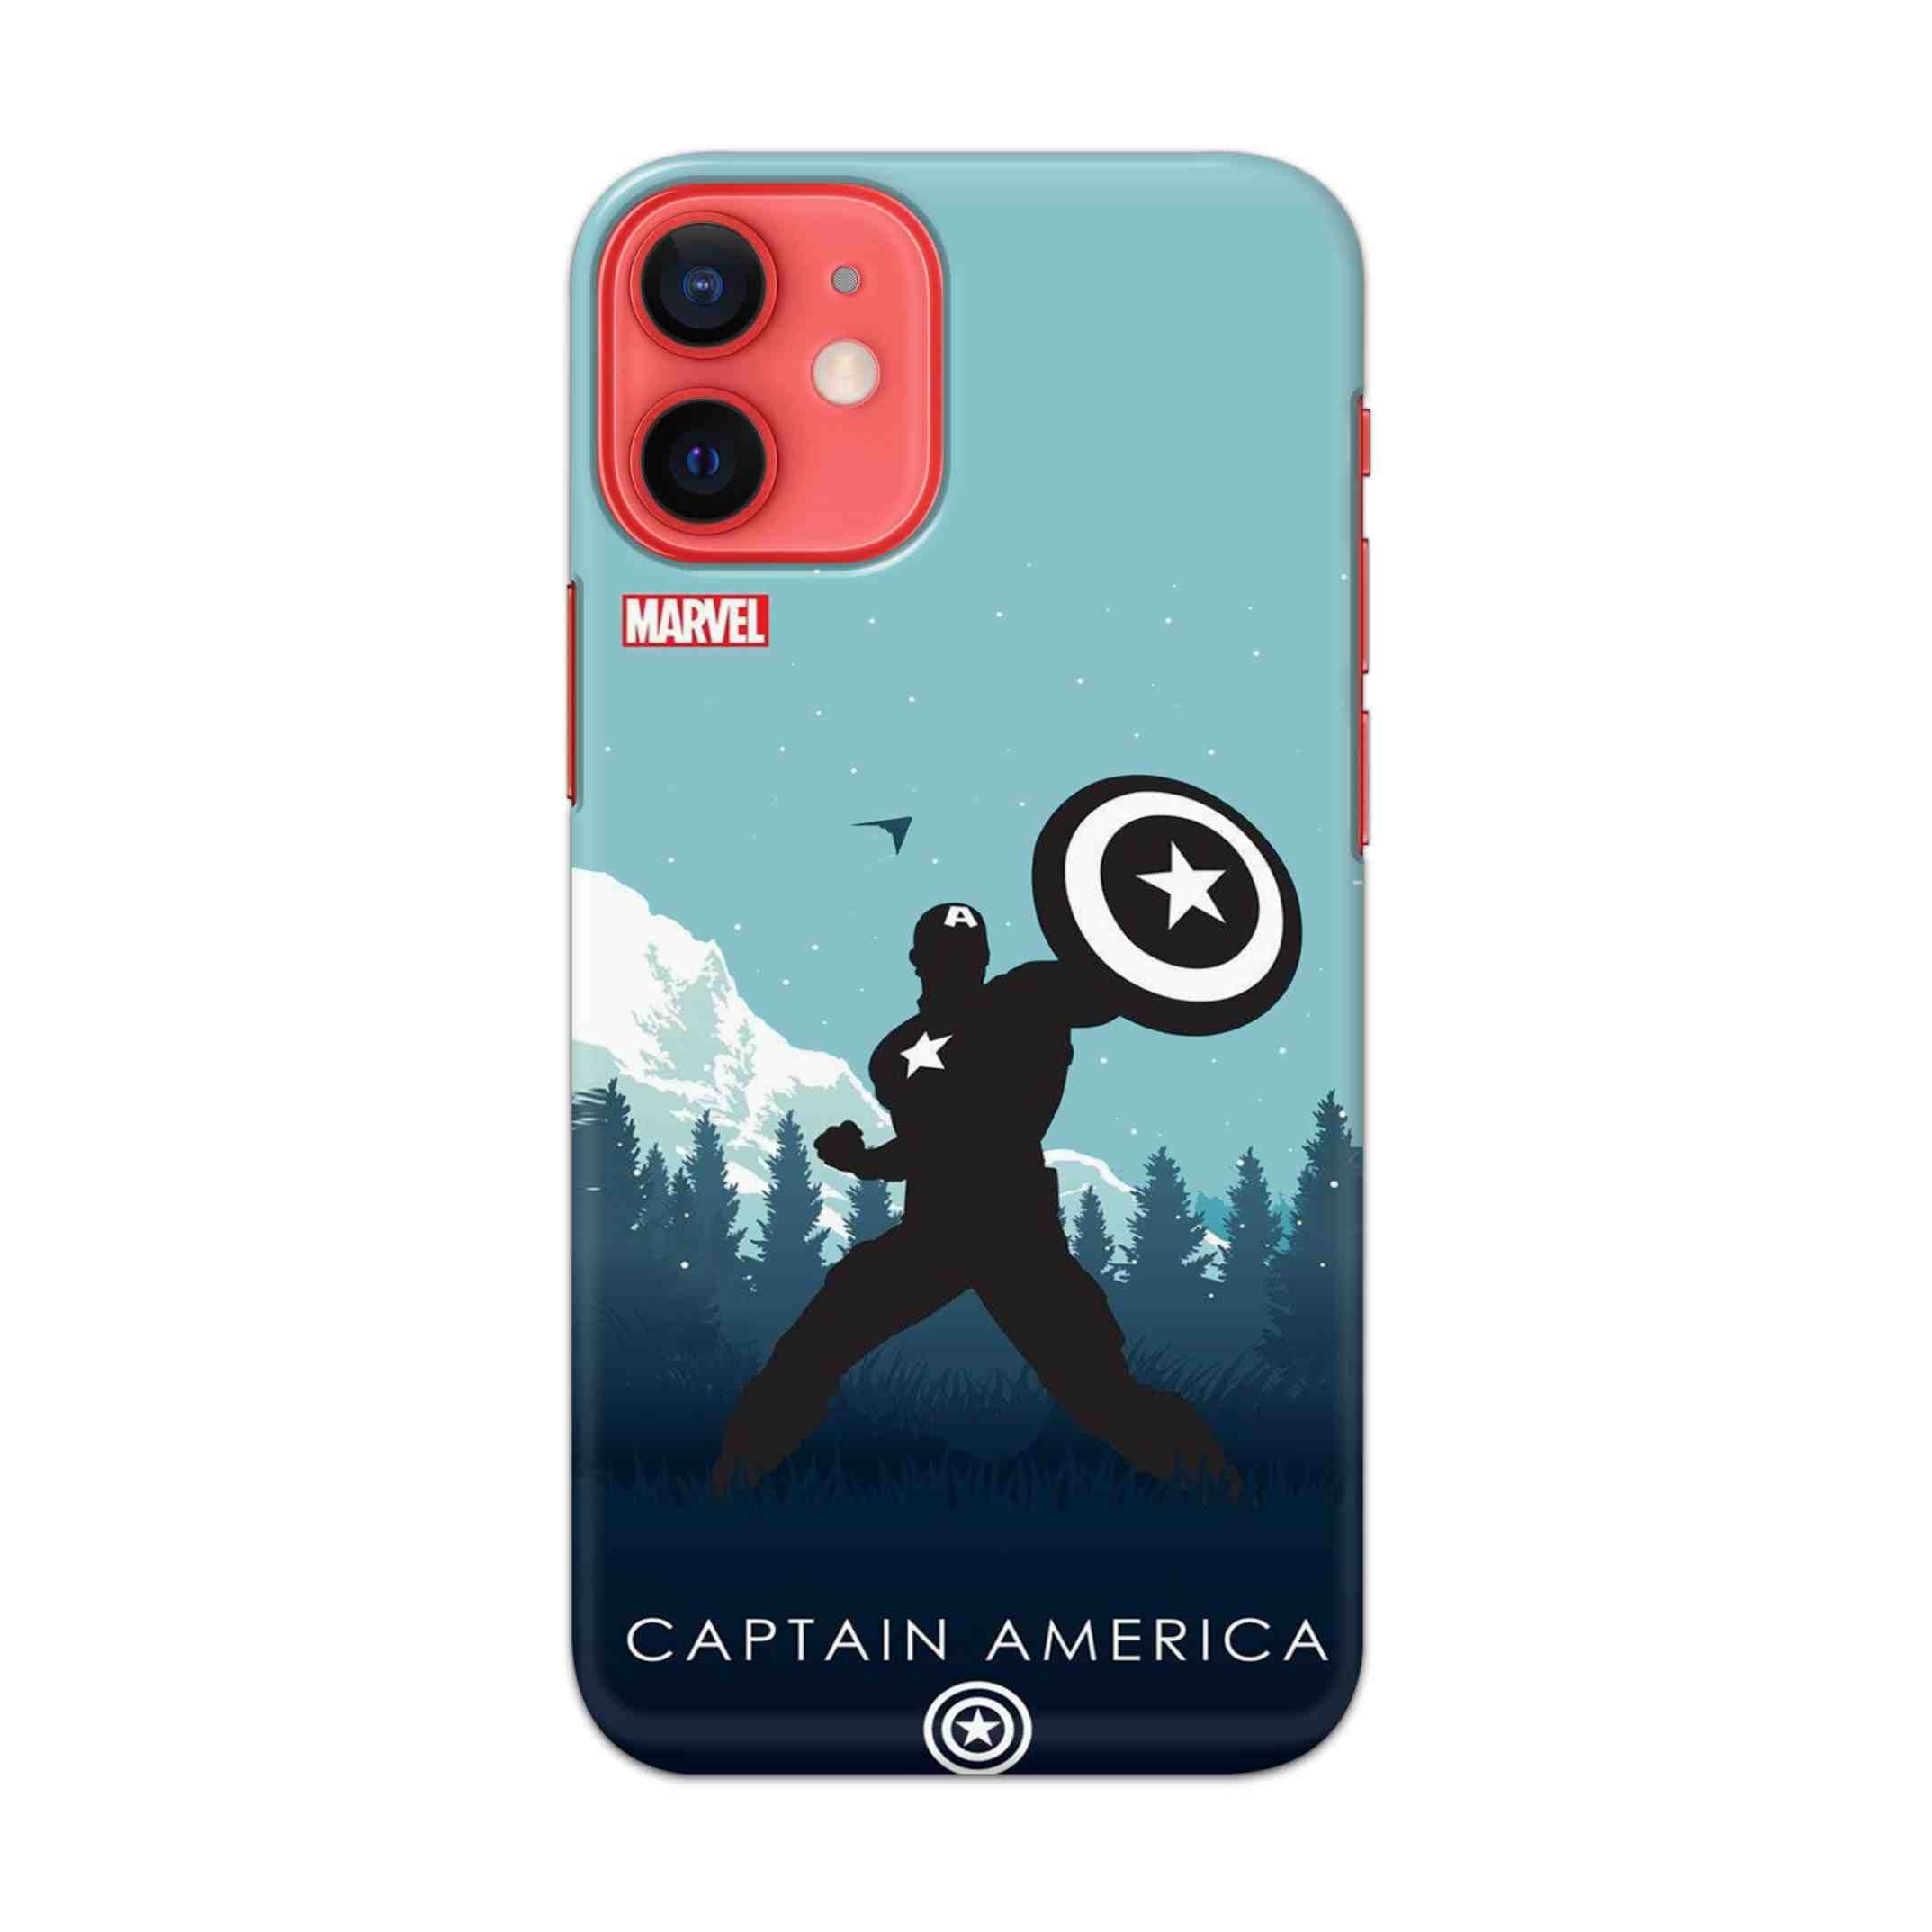 Buy Captain America Hard Back Mobile Phone Case/Cover For Apple iPhone 12 mini Online